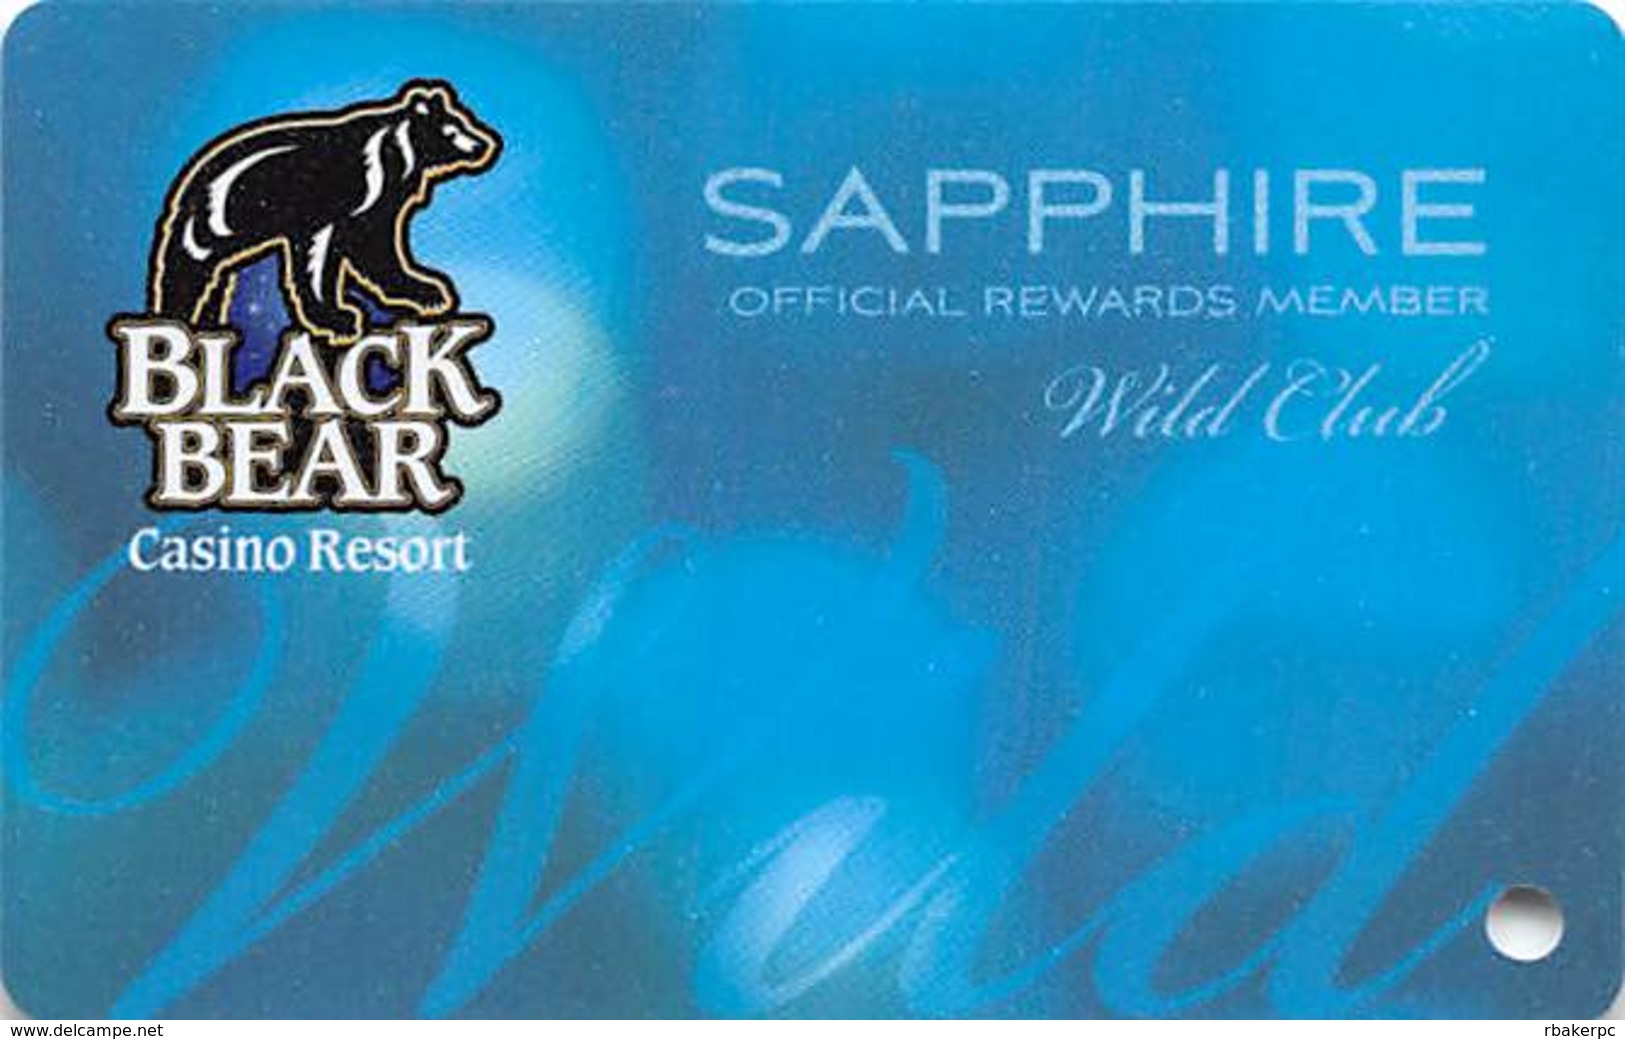 Black Bear Casino - Carlton, MN - BLANK Wild Club Sapphire Slot Card - Casino Cards